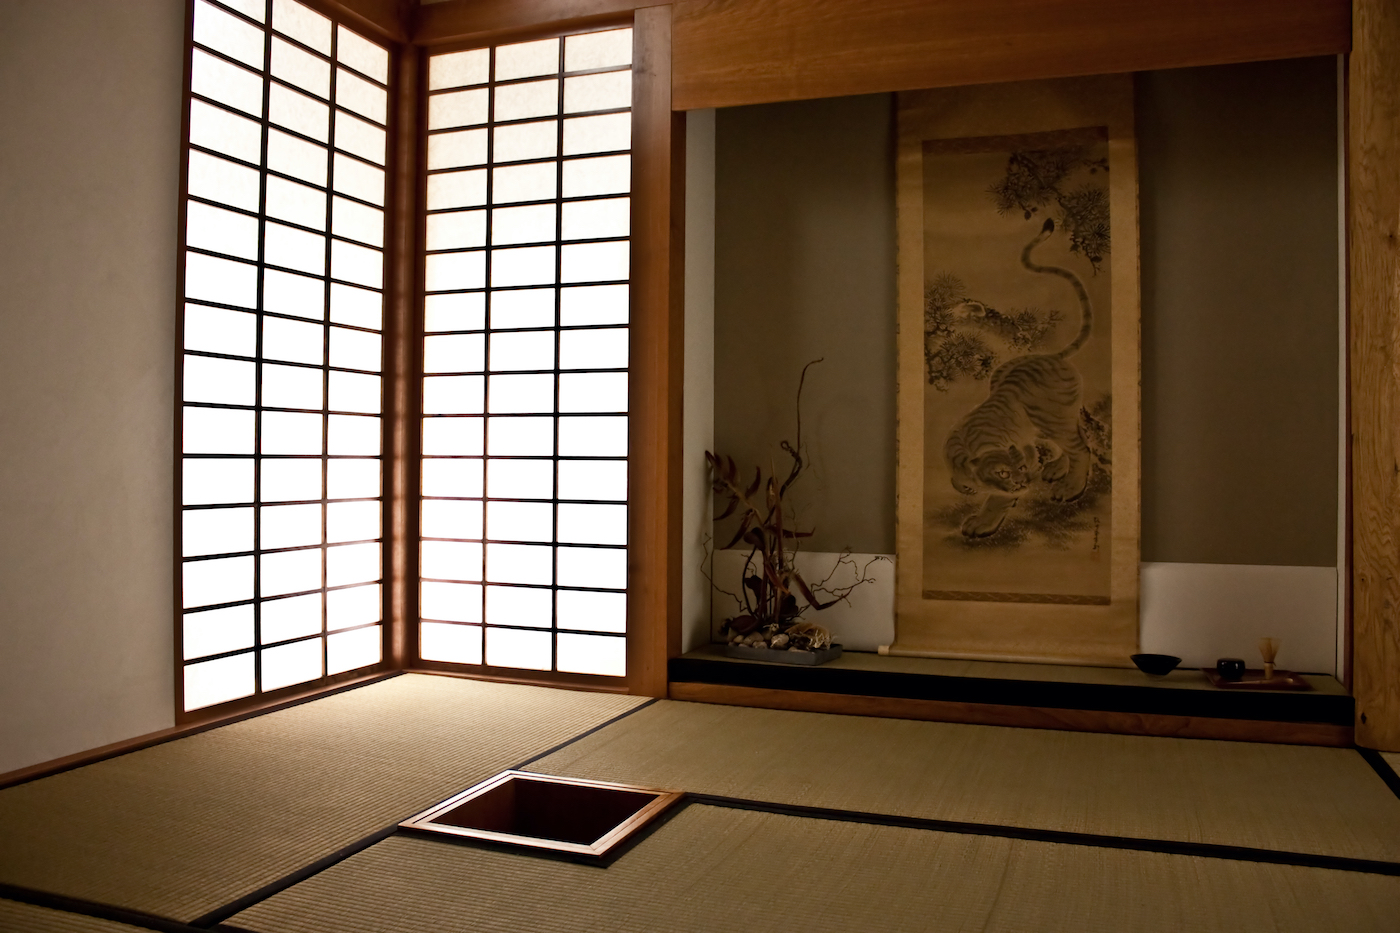 Japanese traditional tea room with Tokonoma